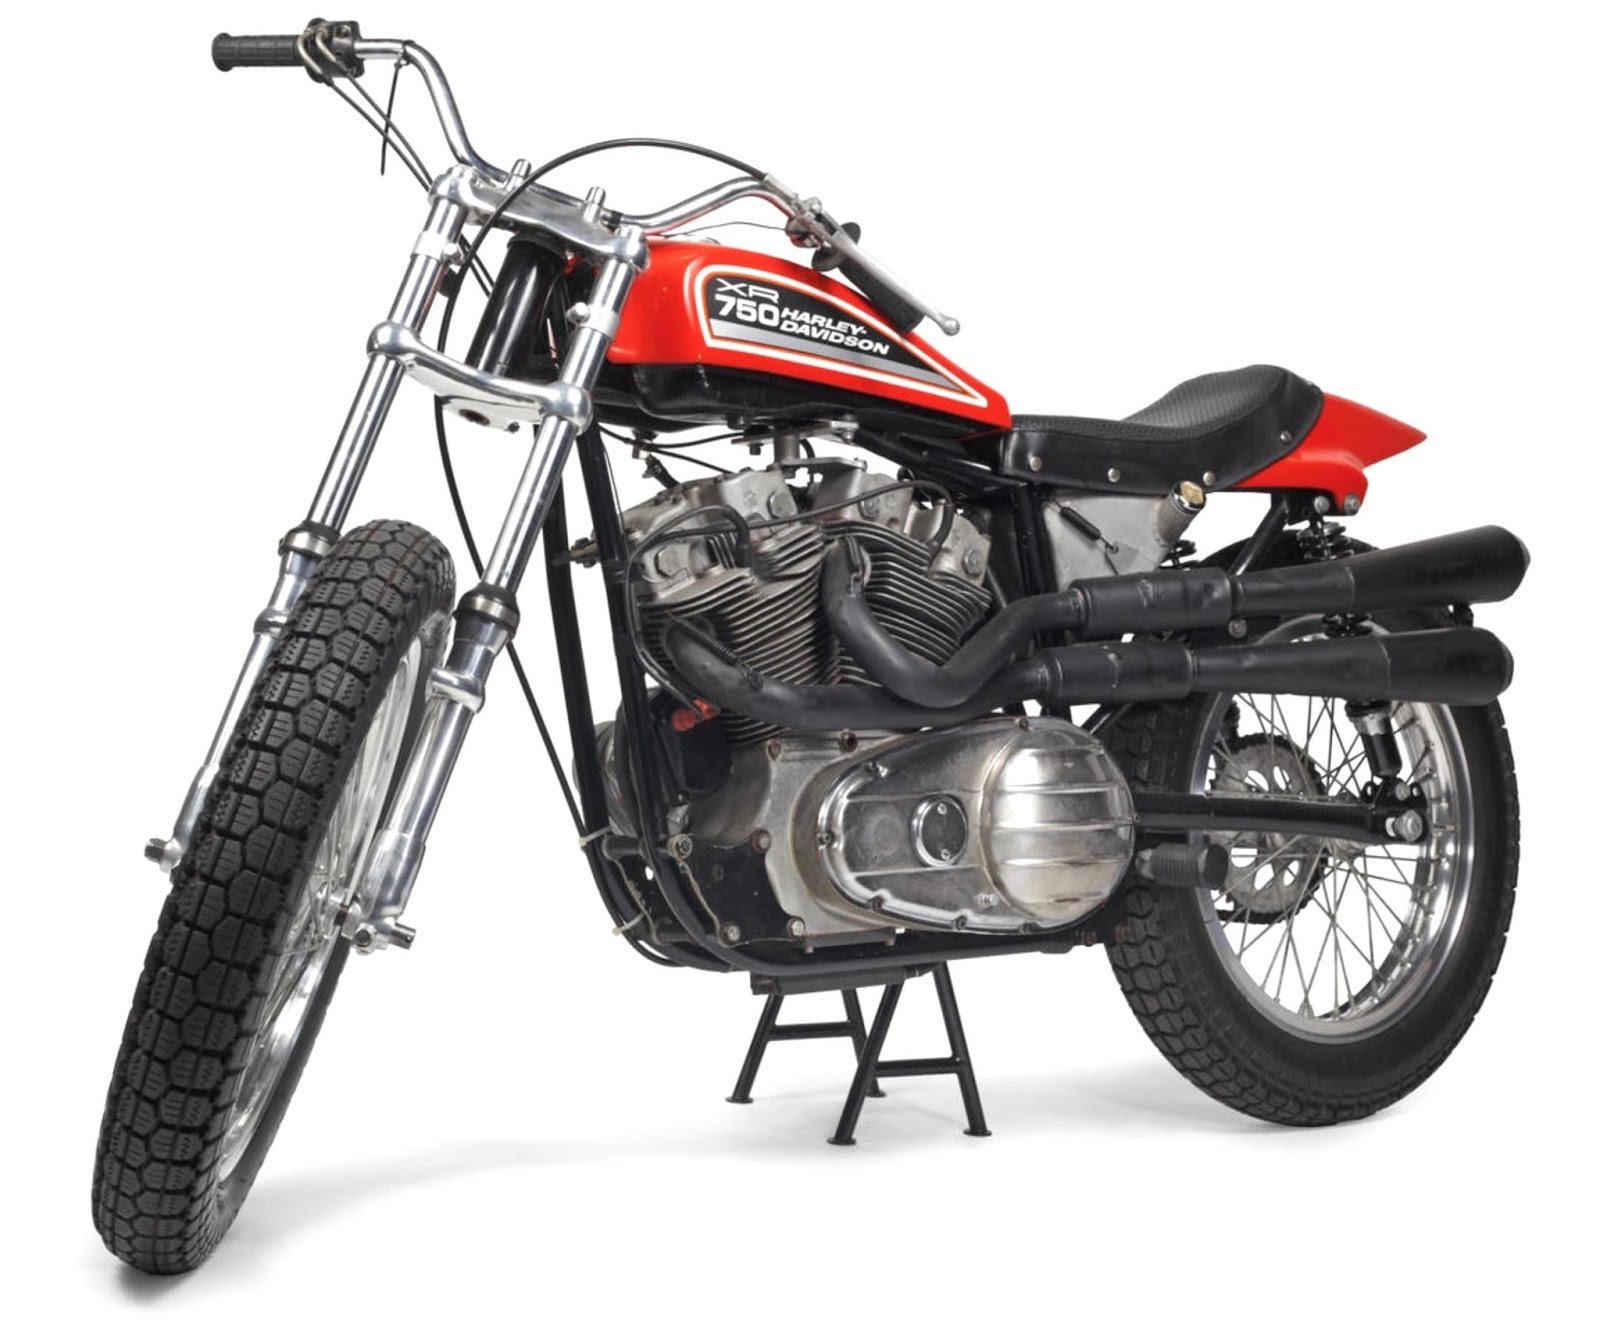 The Harley Davidson Xr 750 A Brief History